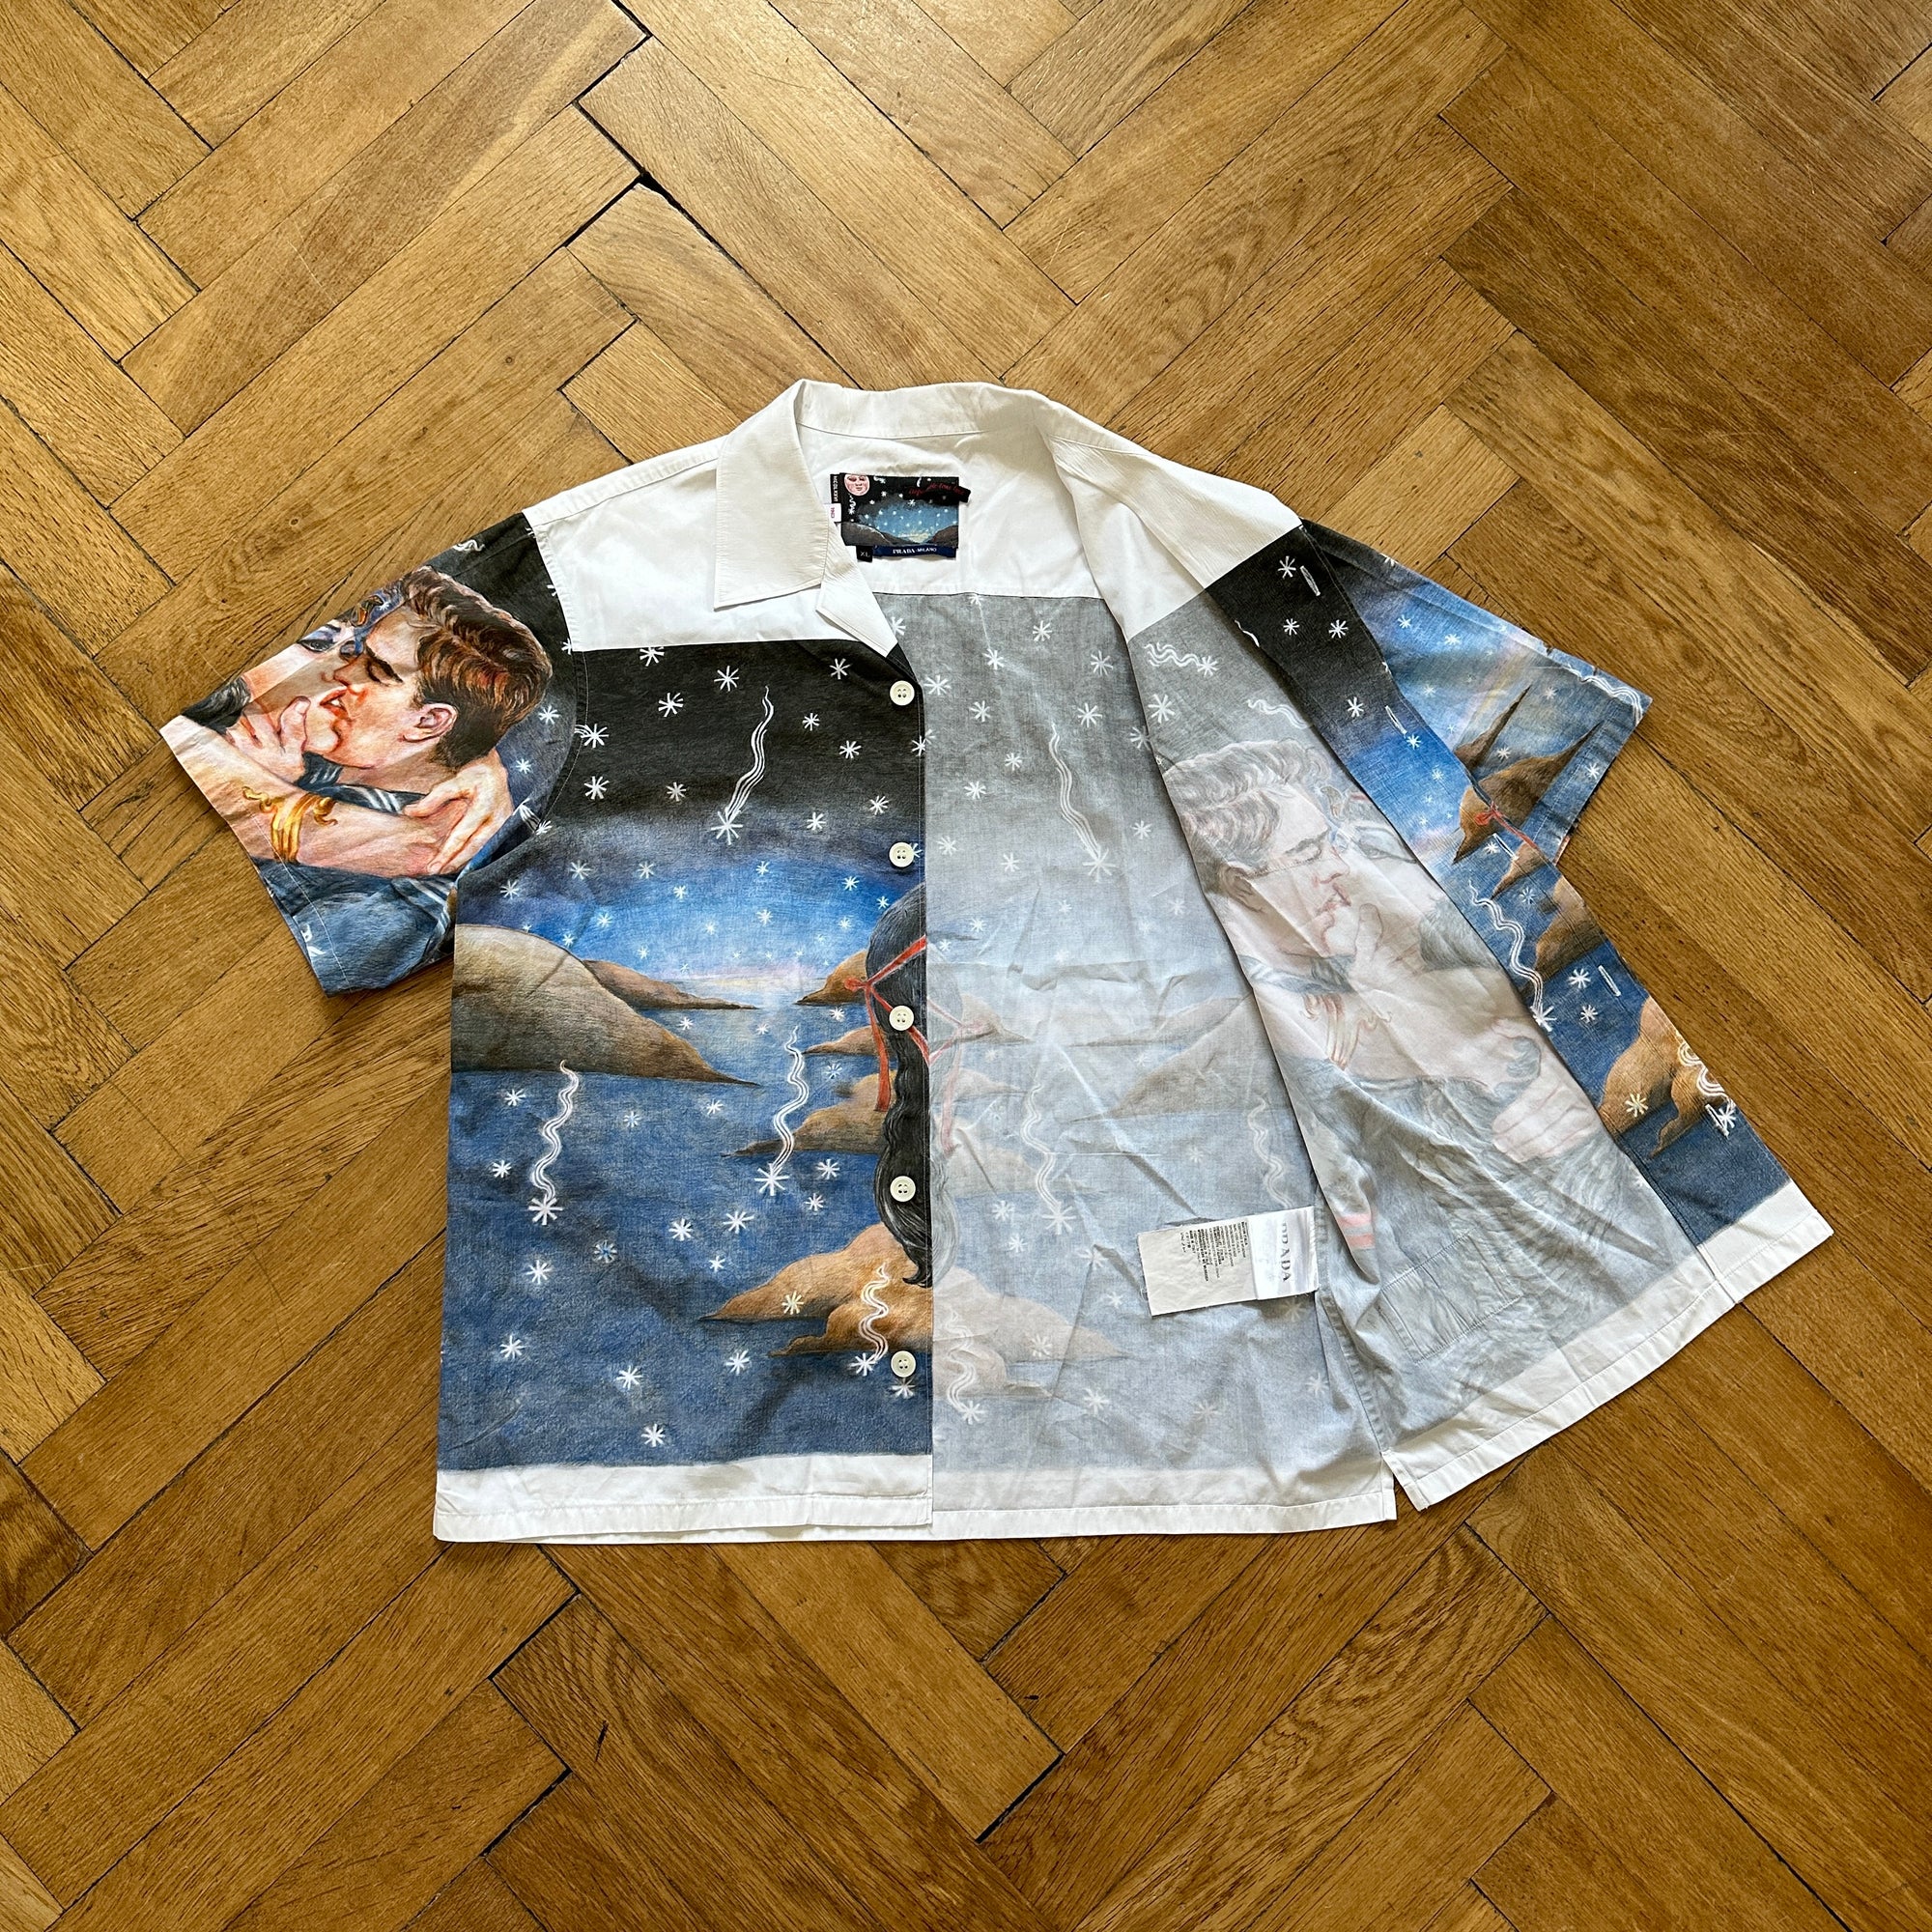 Prada AW16 Christophe Chemin Impossible True Love Shirt